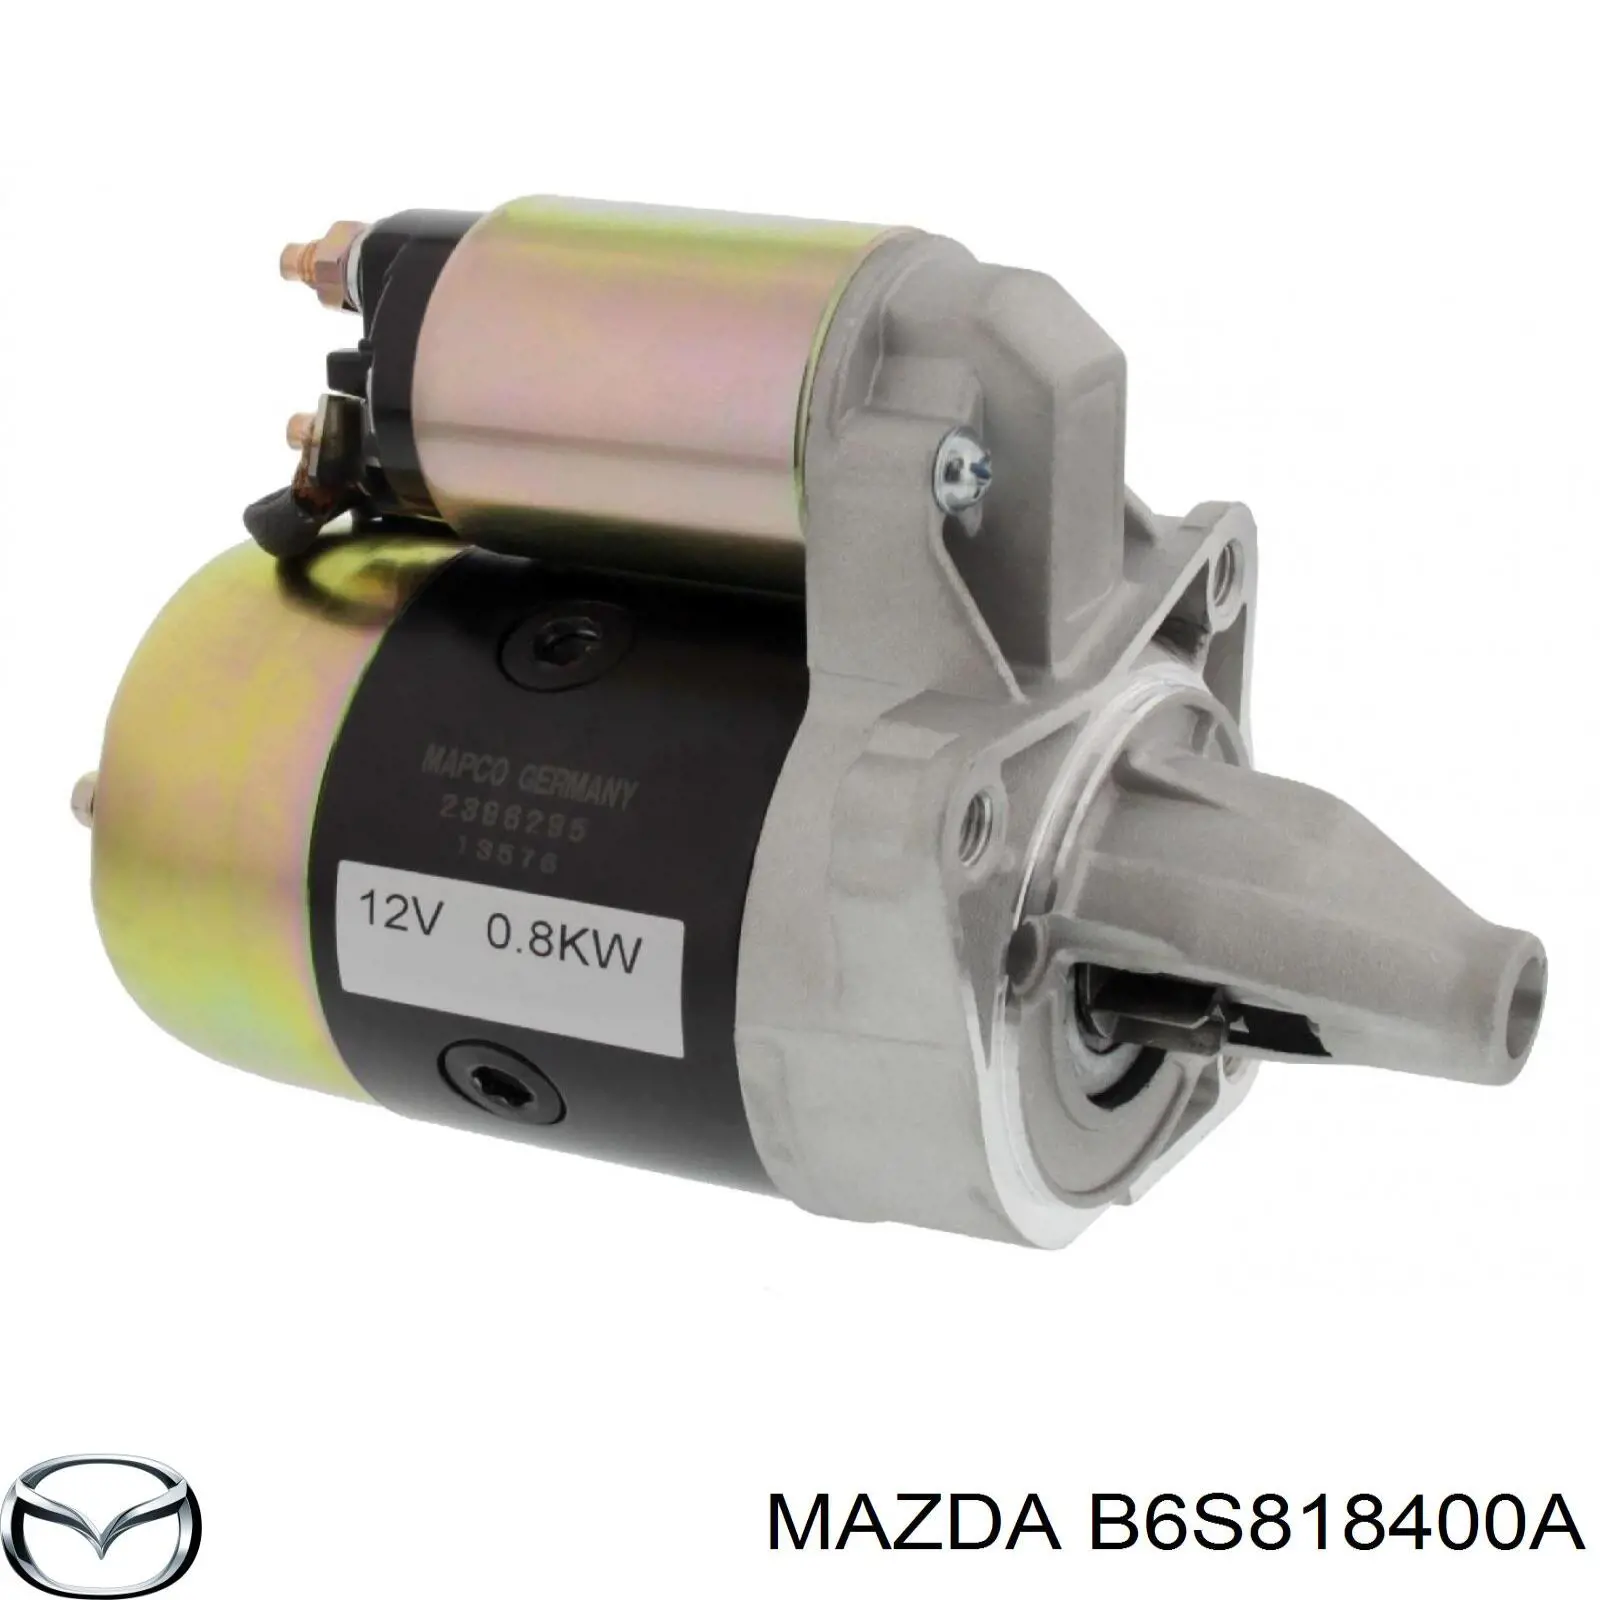 B6S818400A Mazda motor de arranque